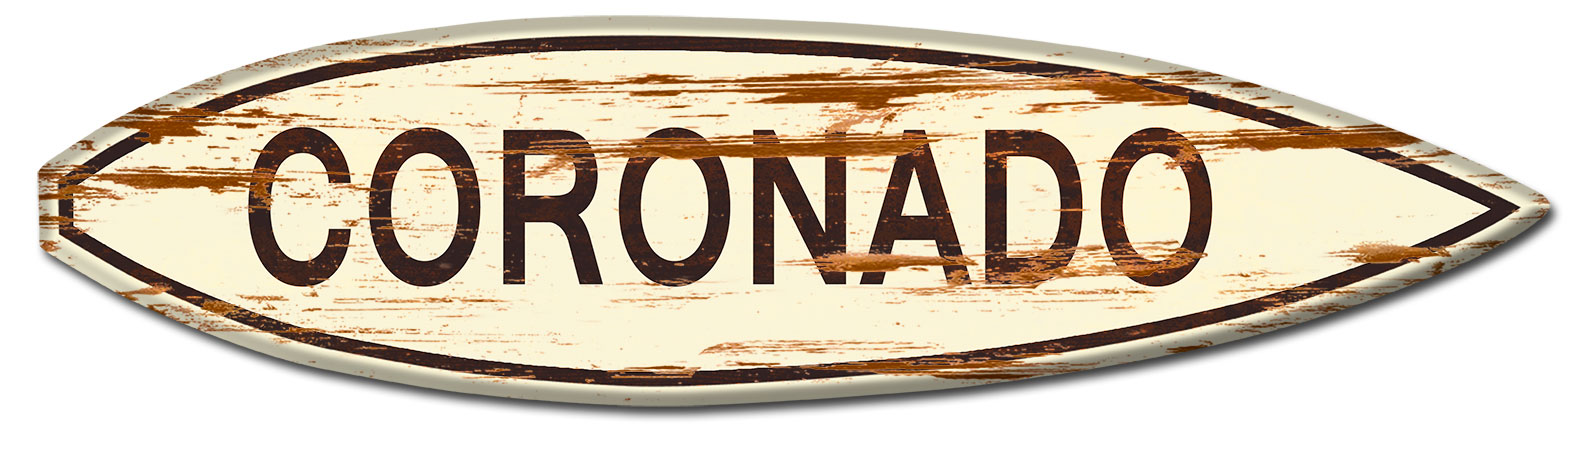 Coronado Surf Board Wood Print Vintage Sign